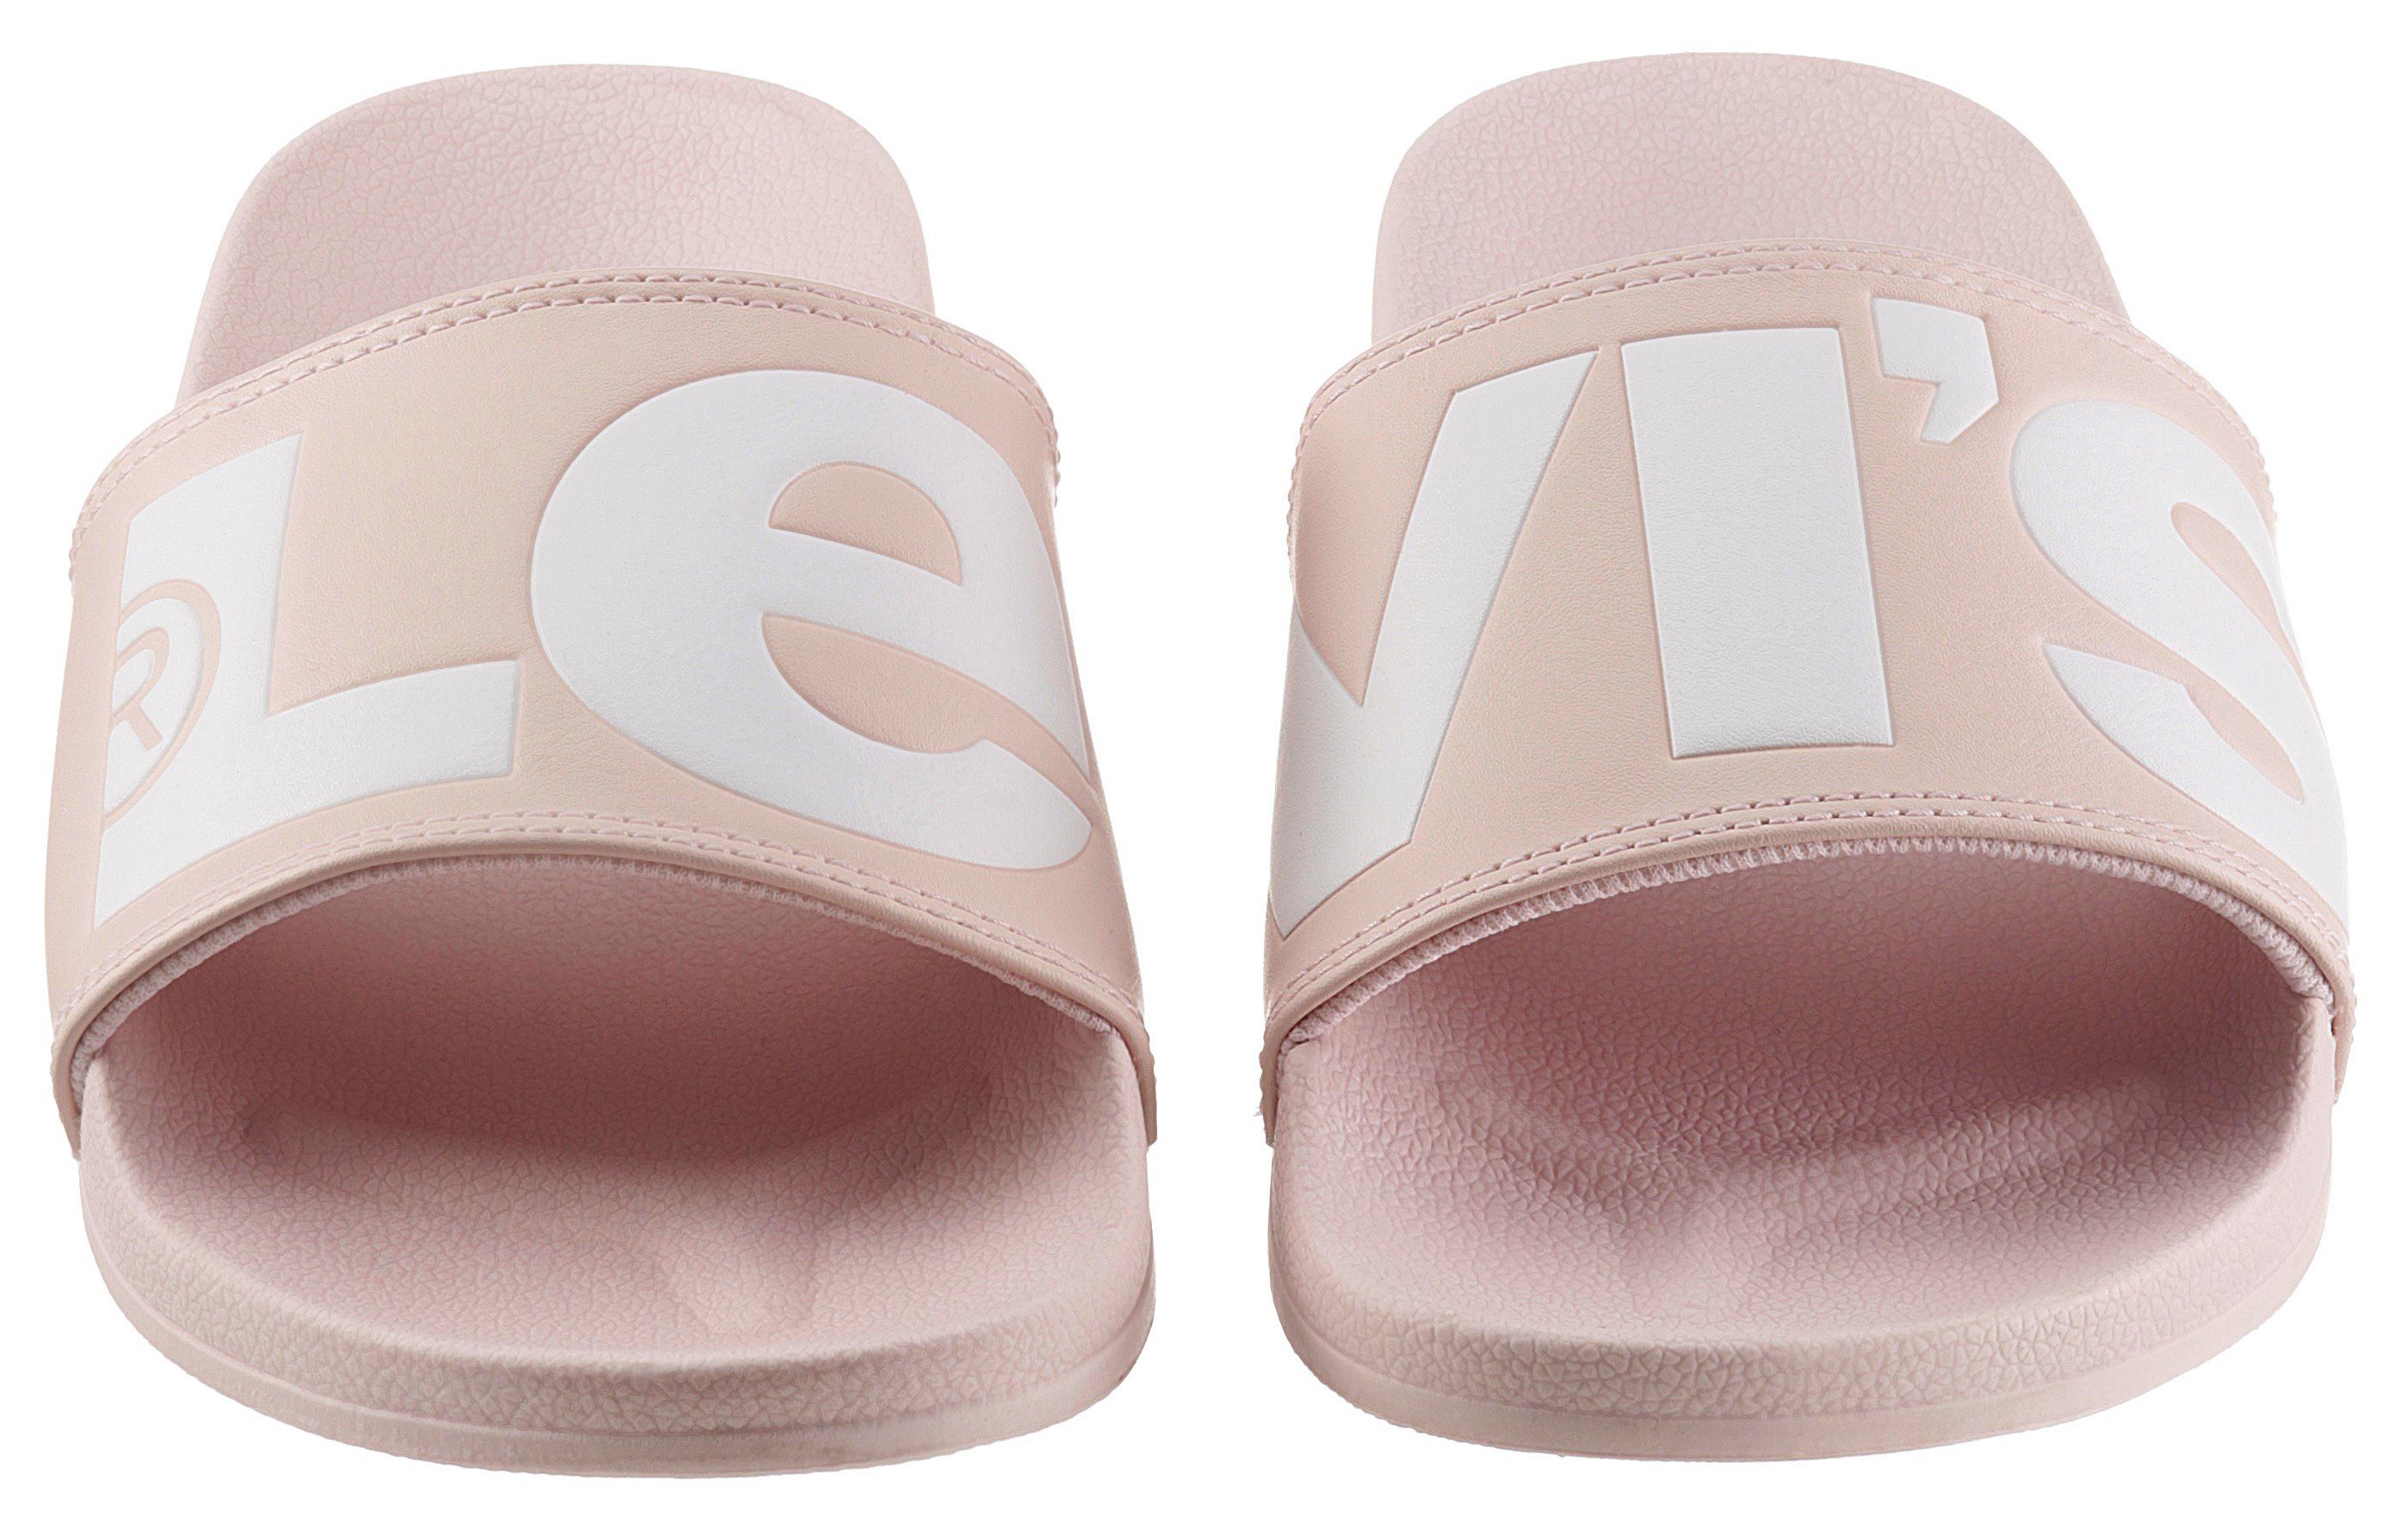 Levi's® June LS Logoschriftzug Badepantolette auffälligem rosé-weiß mit